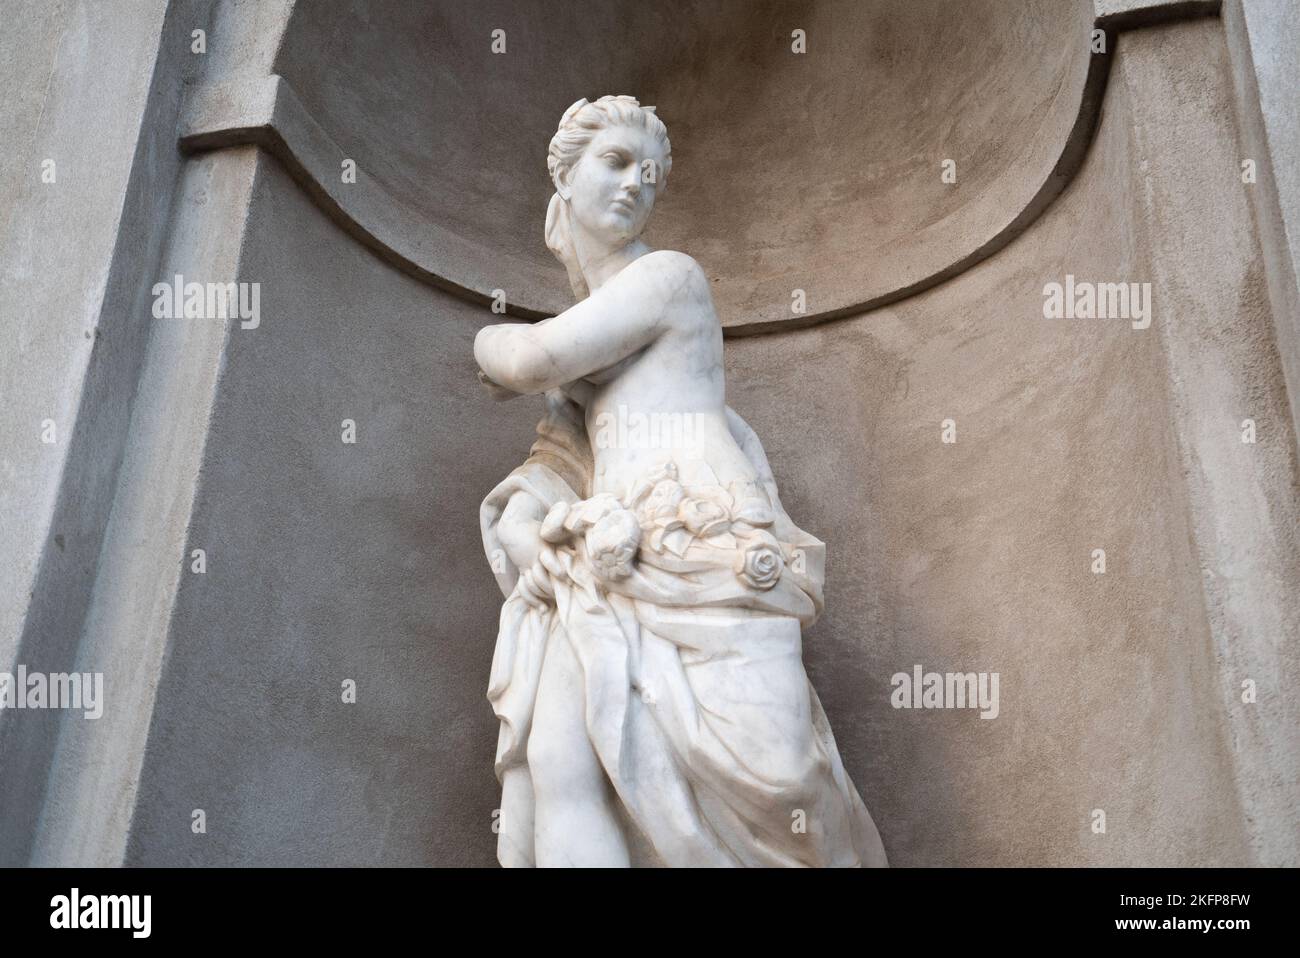 Eurydike, Kongens Have Copenhagen. Statue in the Herkulespavillonen in Kongens Have, Denmark. Sculptor: Giovanni Baratta. White marble statue of woman. Stock Photo